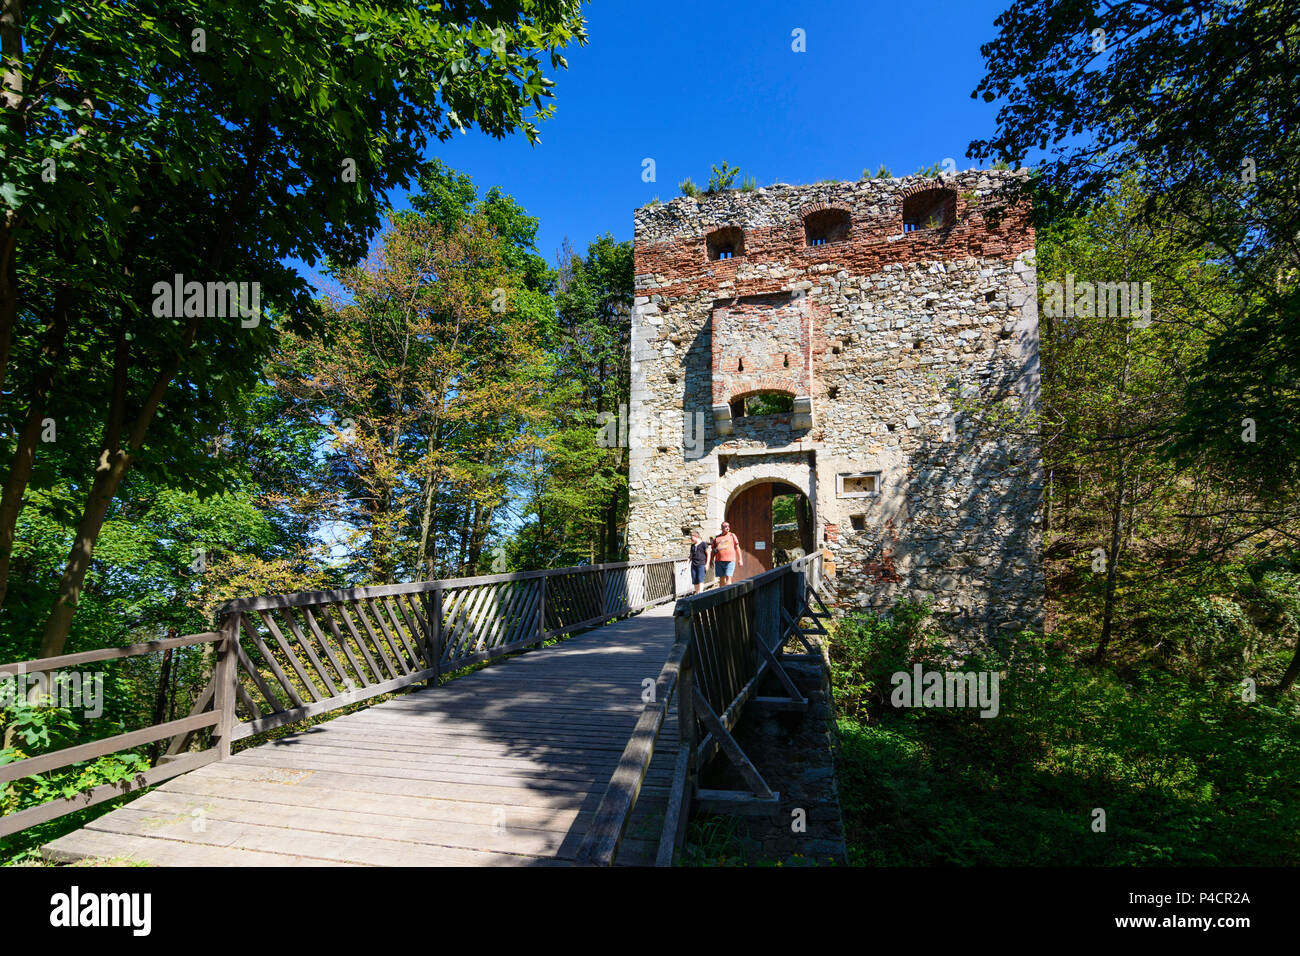 Markt Sankt Martin, castle ruin Landsee, Naturpark Landseer Berge (natural preserve Landsee mountains), Mittelburgenland, Burgenland, Austria Stock Photo